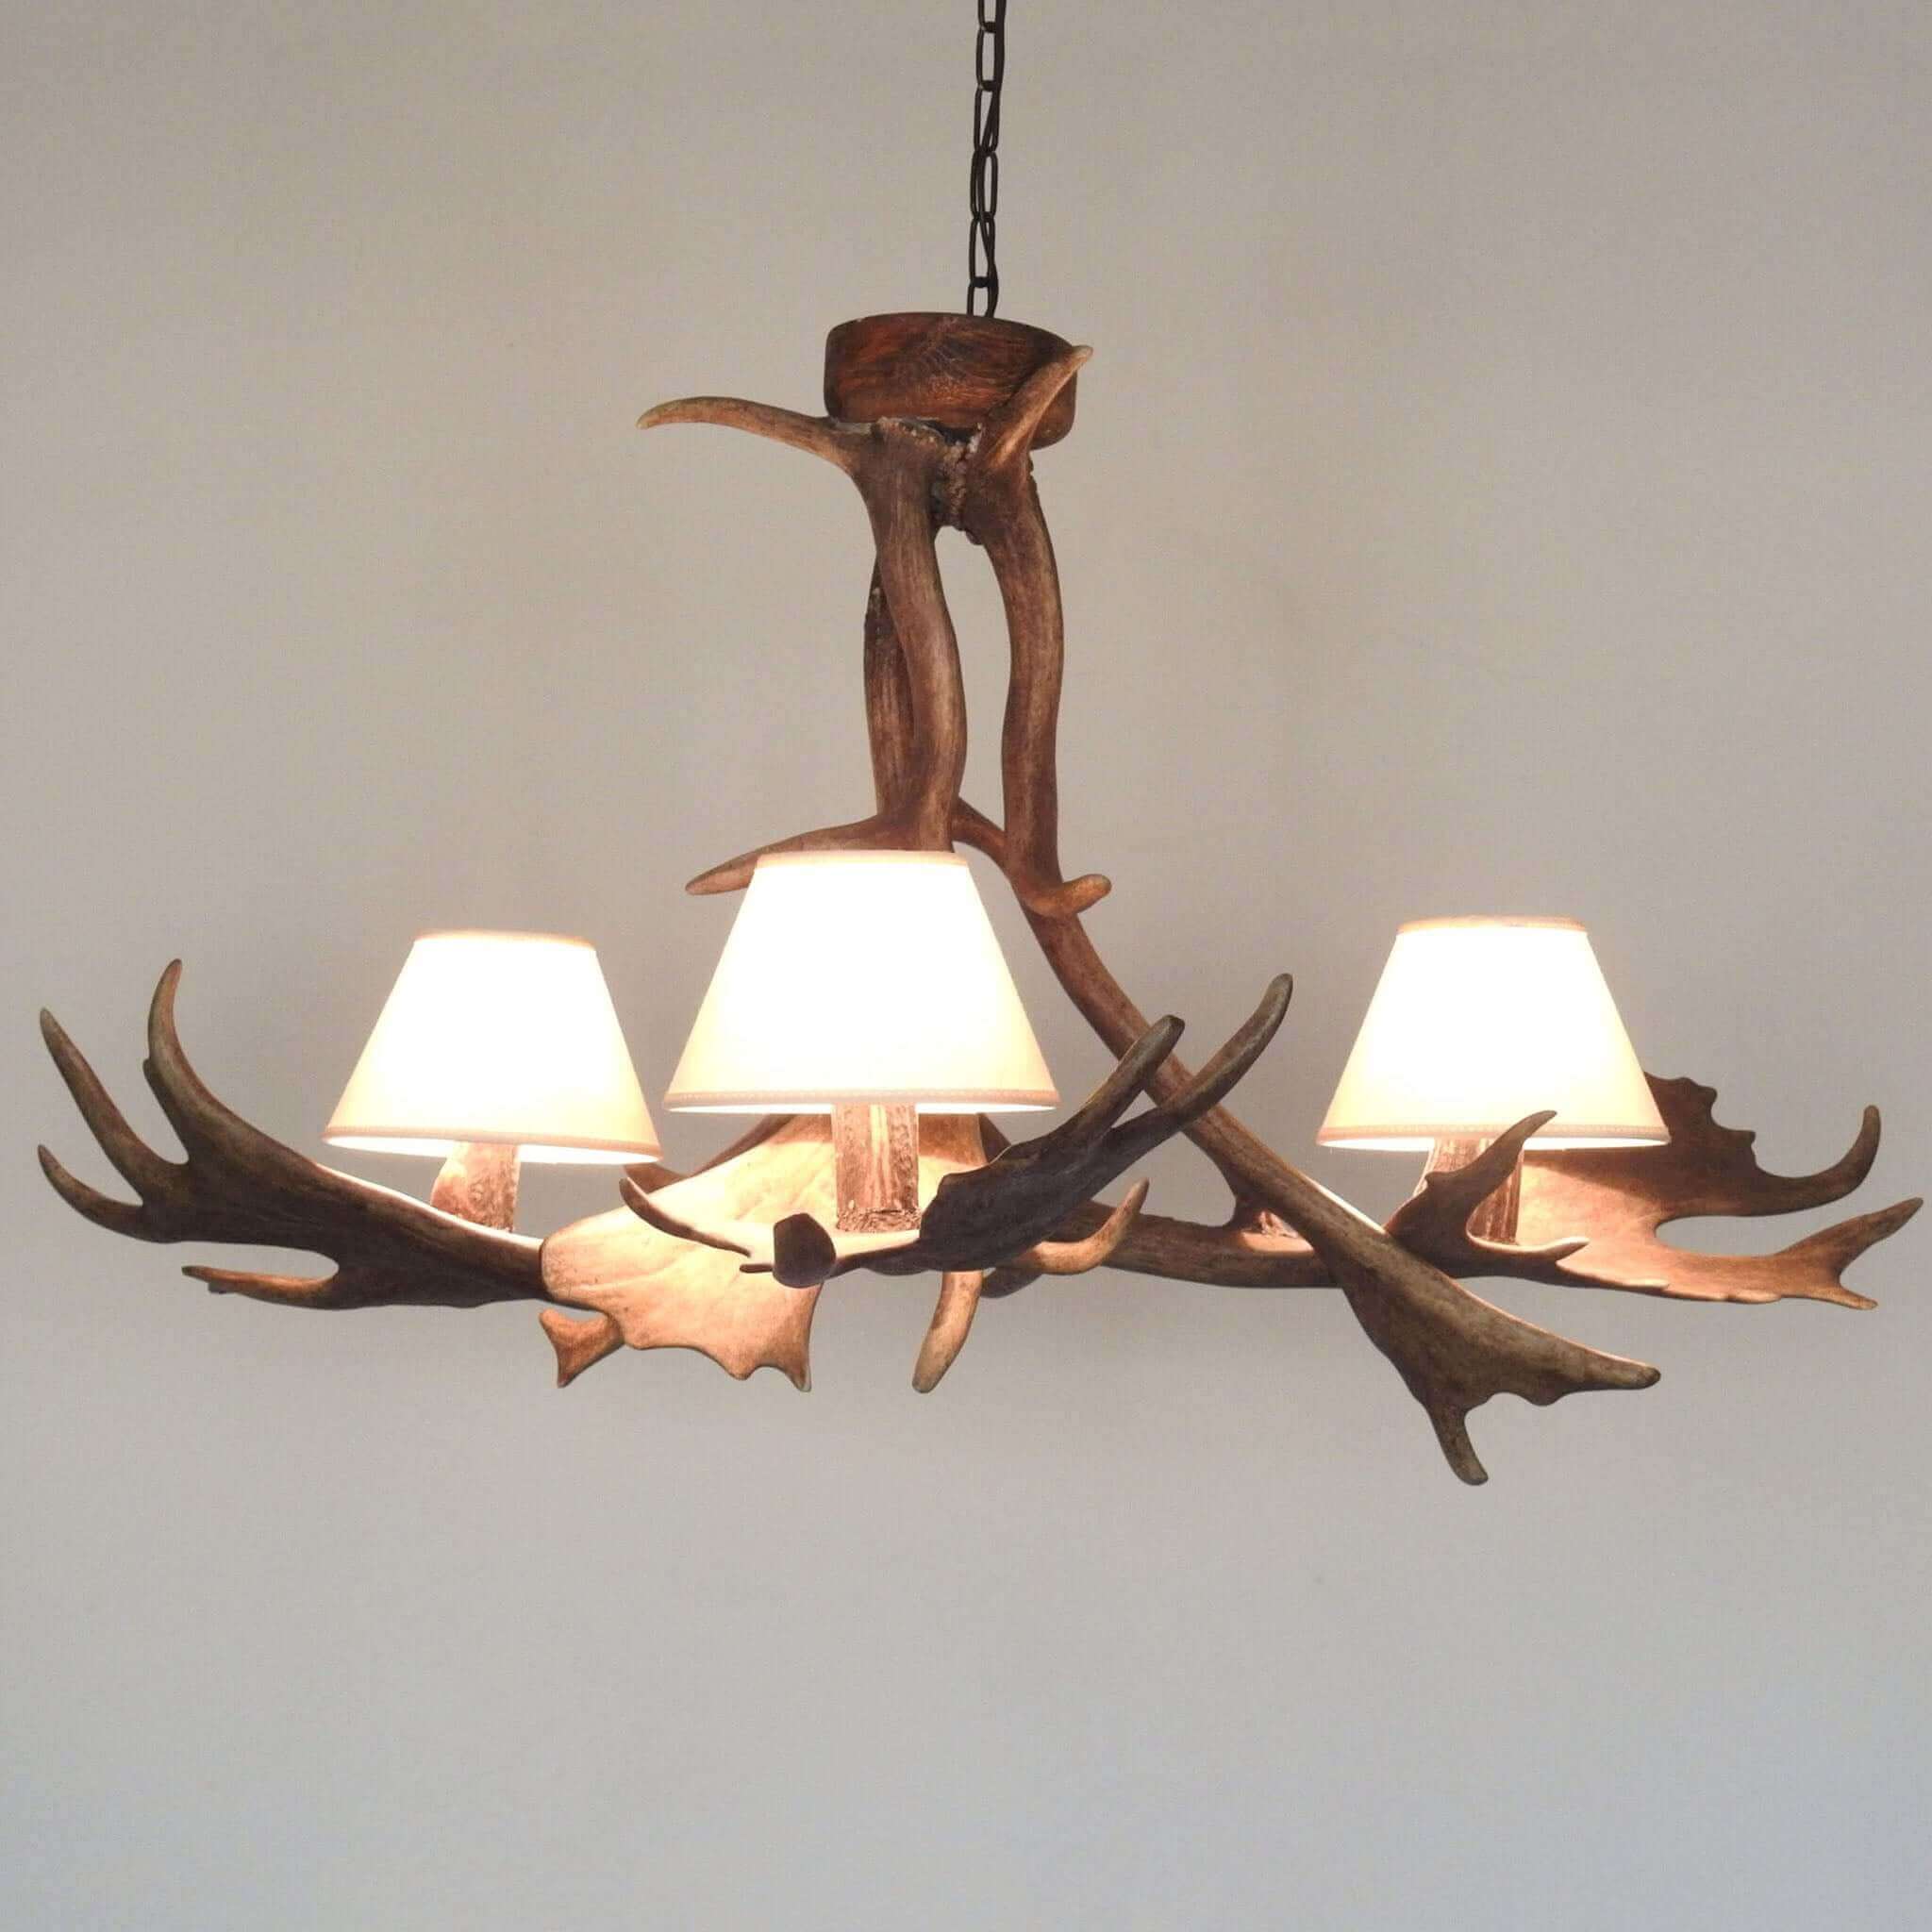 Rustic antler chandelier made of fallow deer antlers.